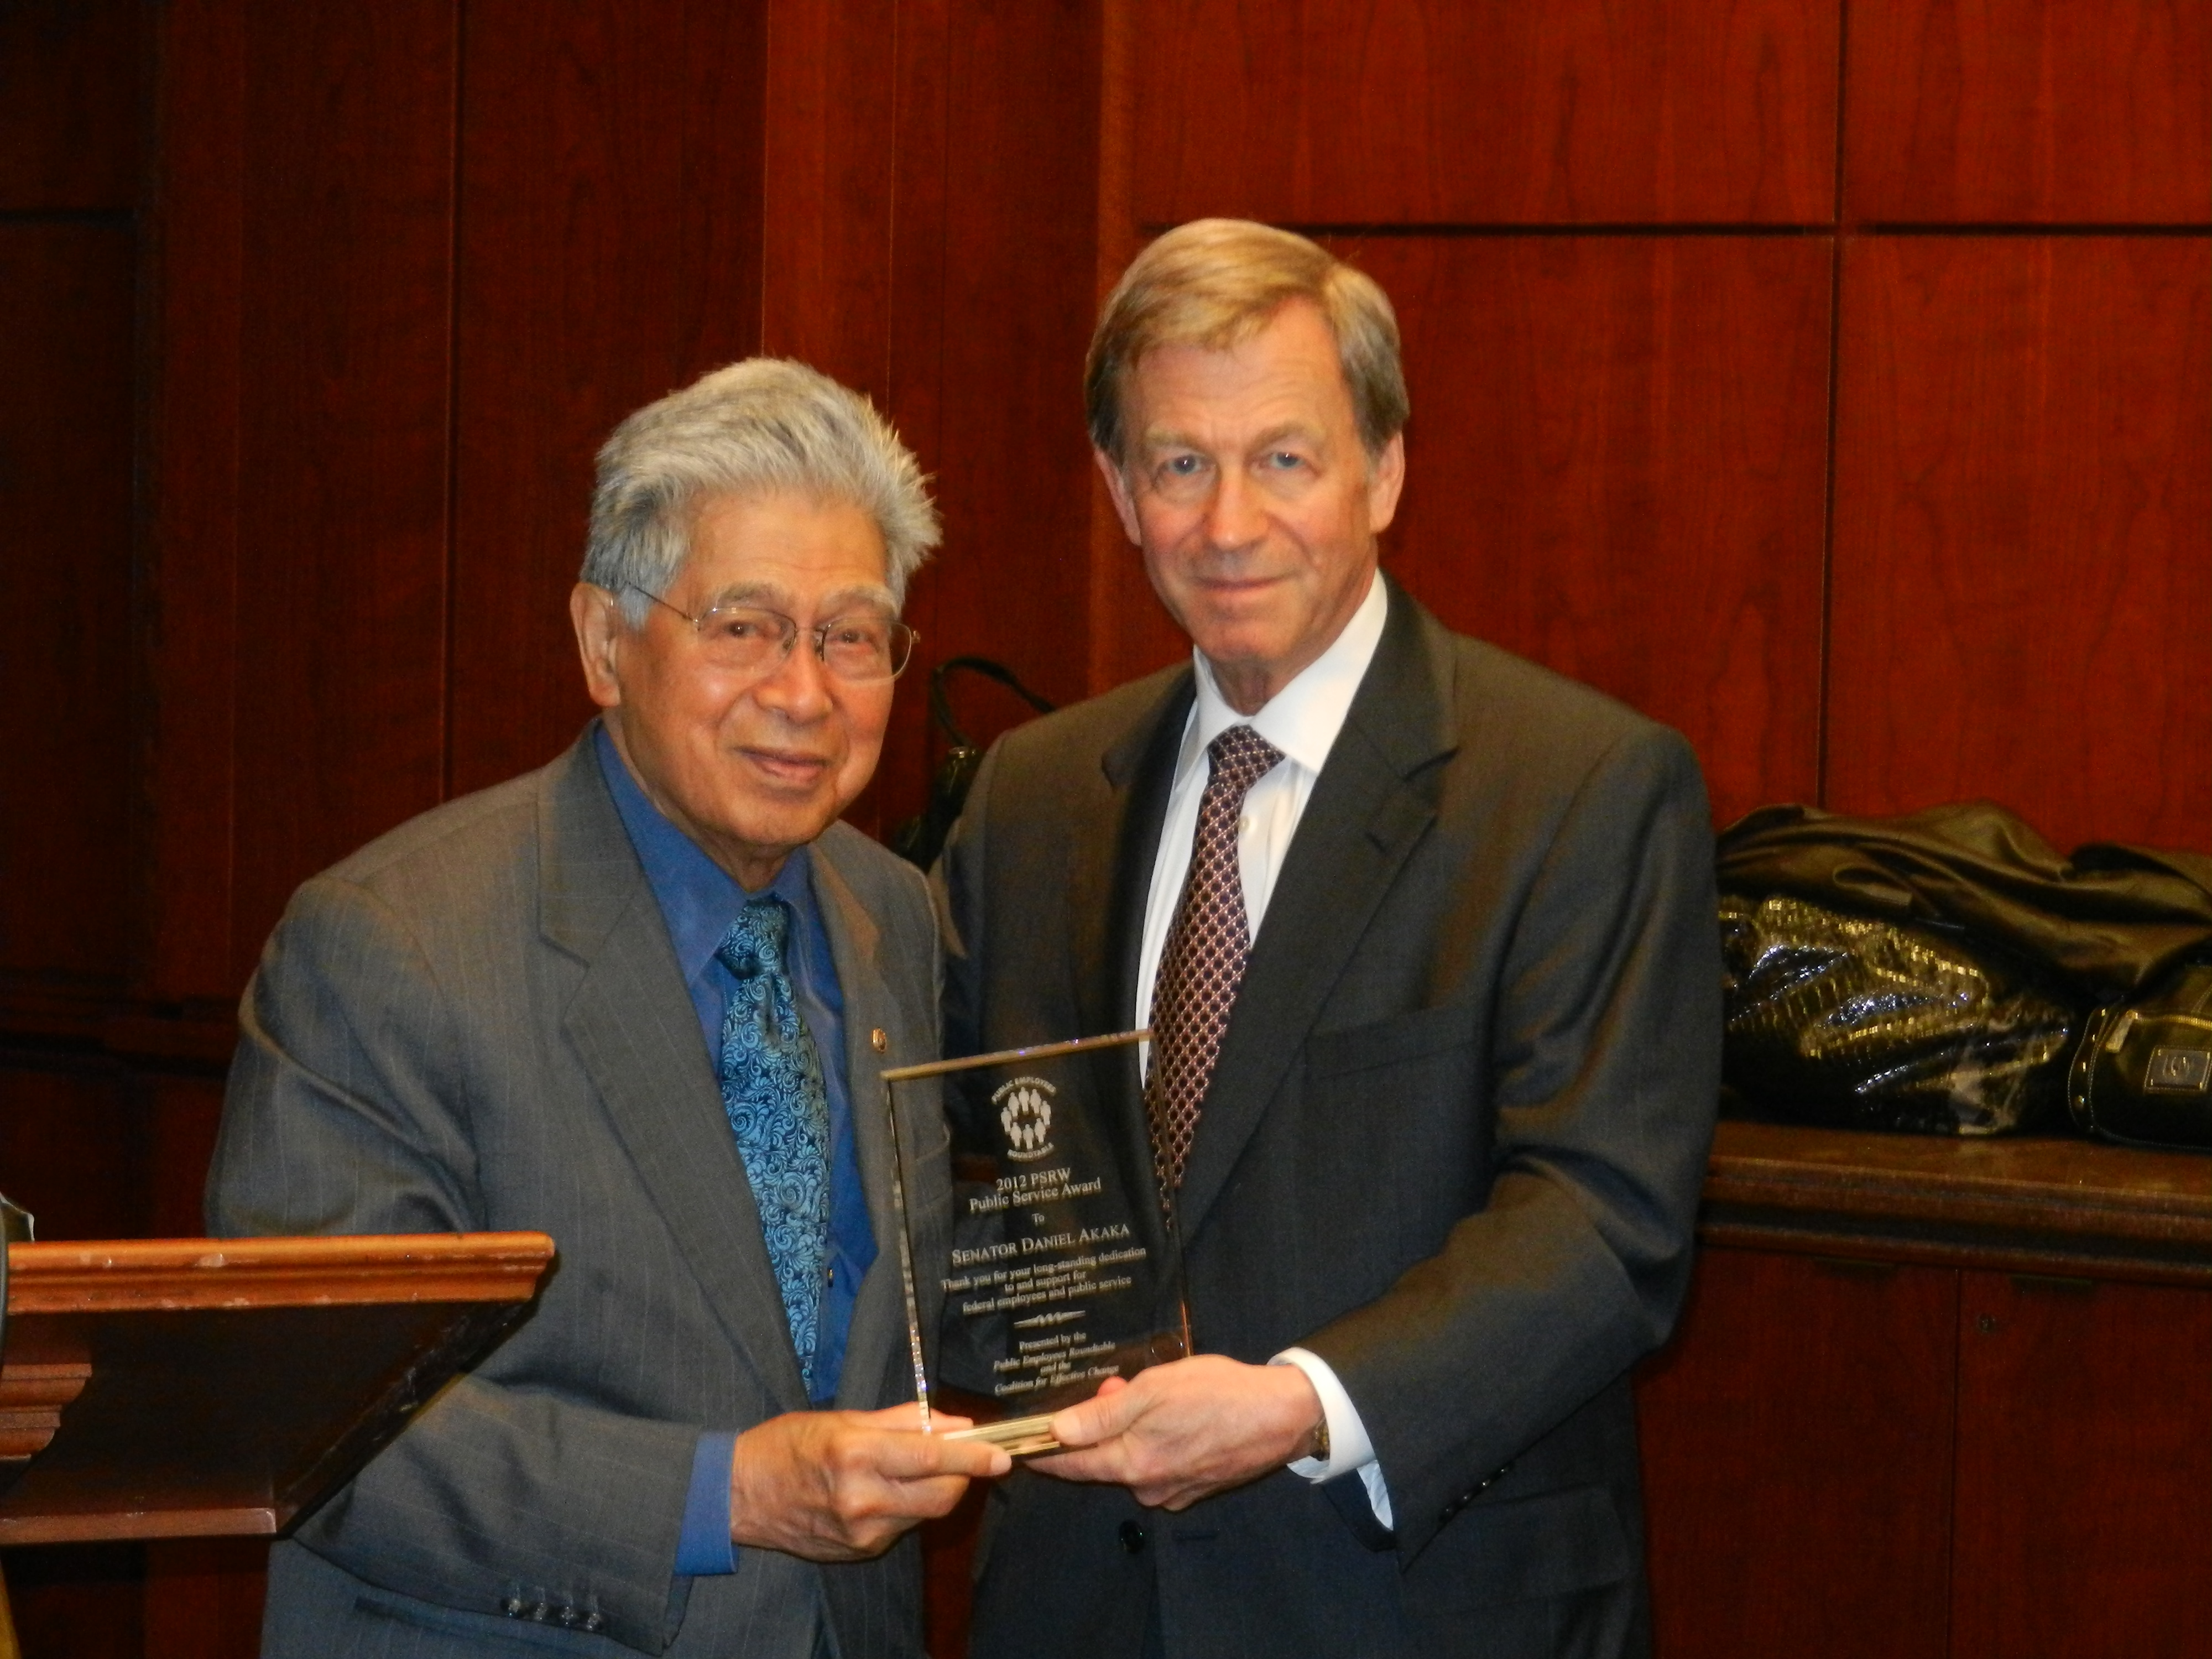 Senator Akaka Receives Public Service Award